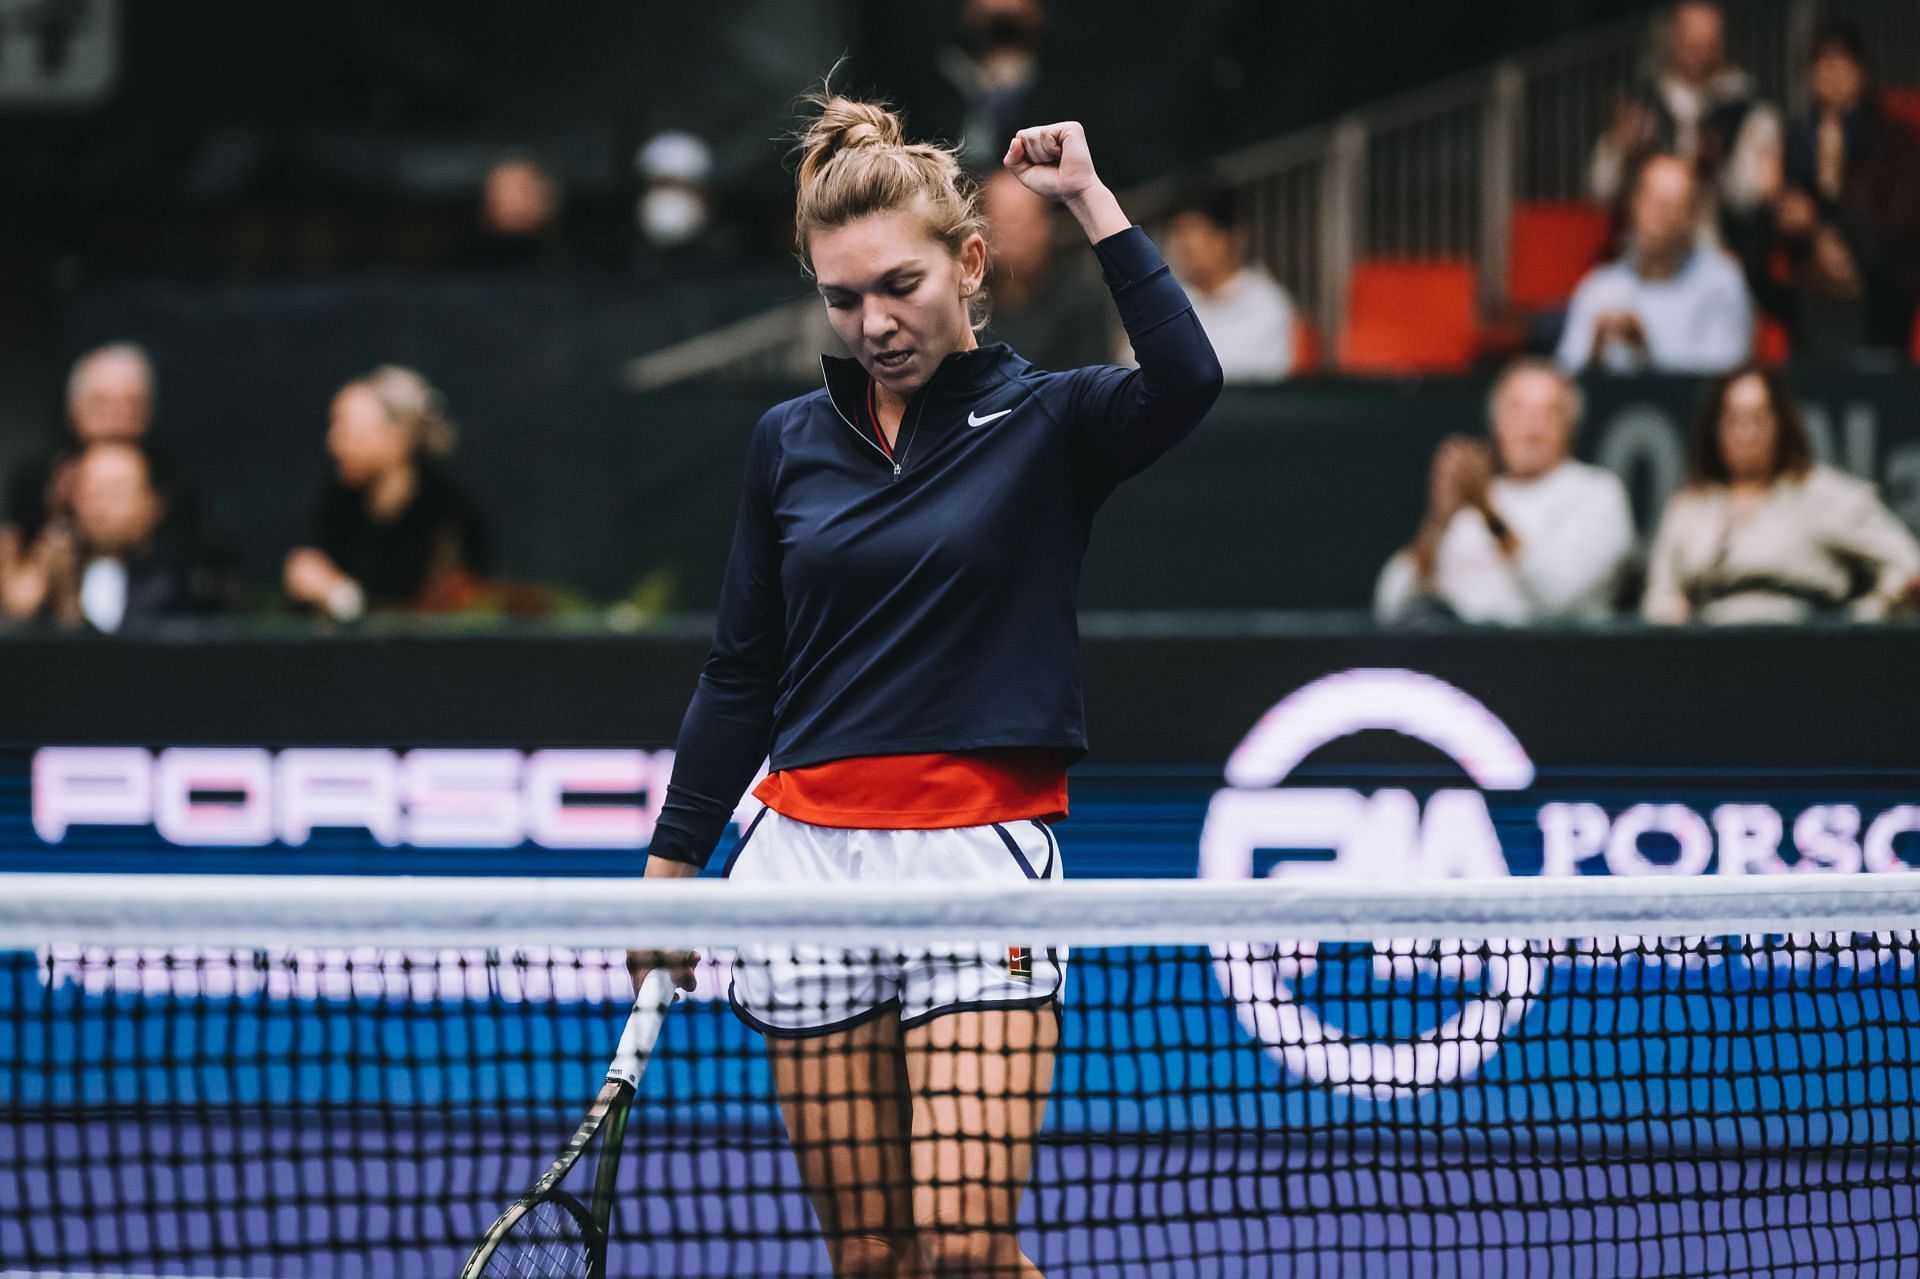 Simona Halep at the 2021 Linz Open.